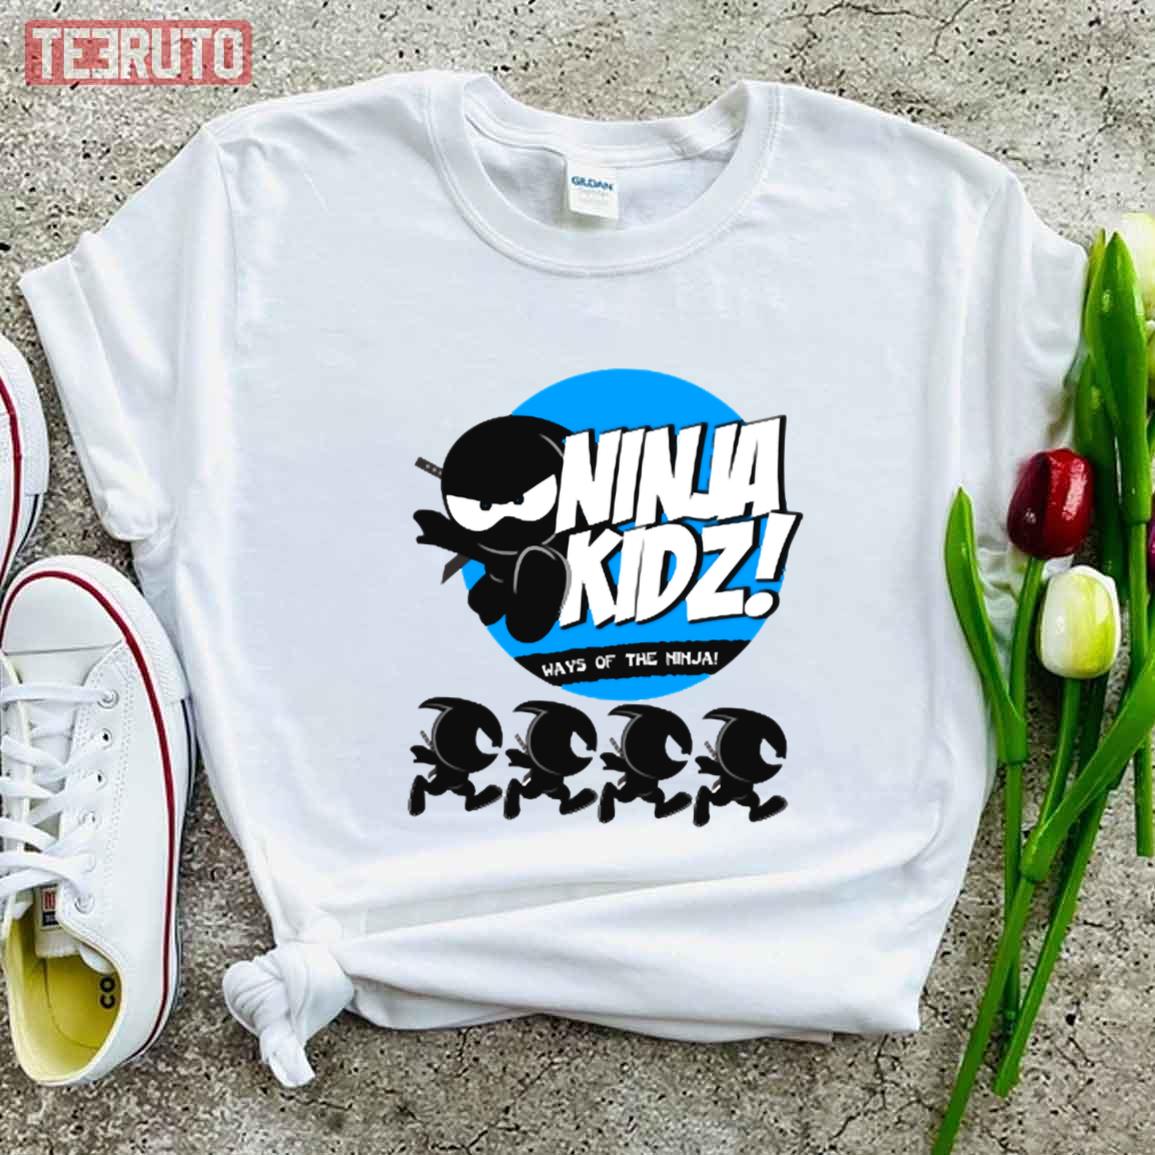 https://teeruto.com/wp-content/uploads/2022/07/ninja-kidz-tv-designs-ways-of-the-ninja-unisex-tshirt-unisex-tshirt6bi6a.jpg